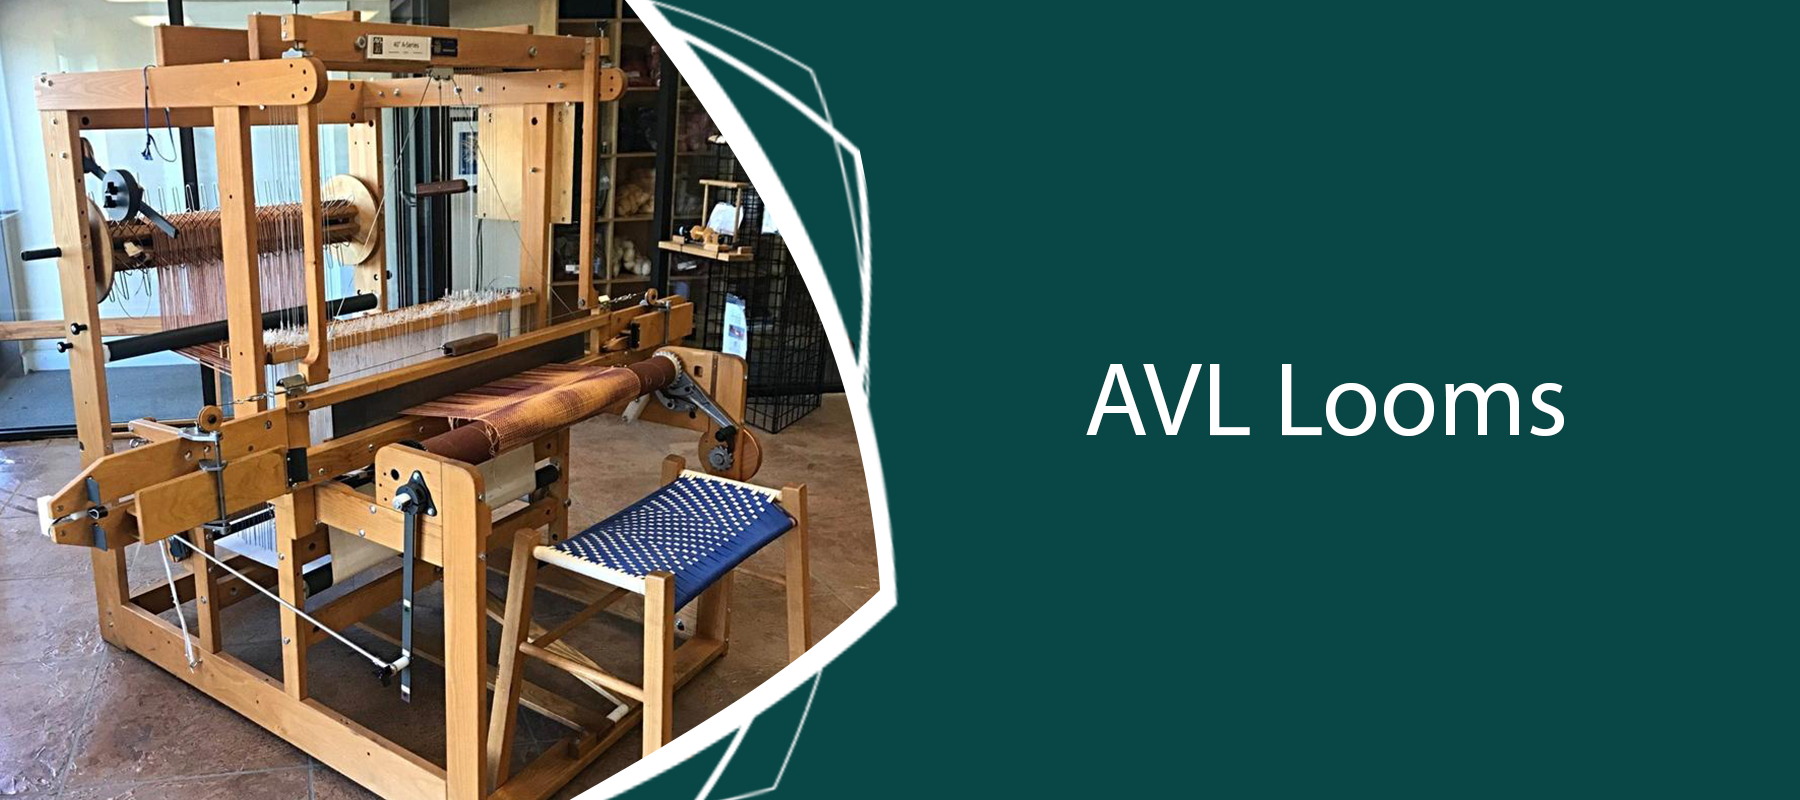 AVL Looms - Premium Handweaving Looms and Equipment